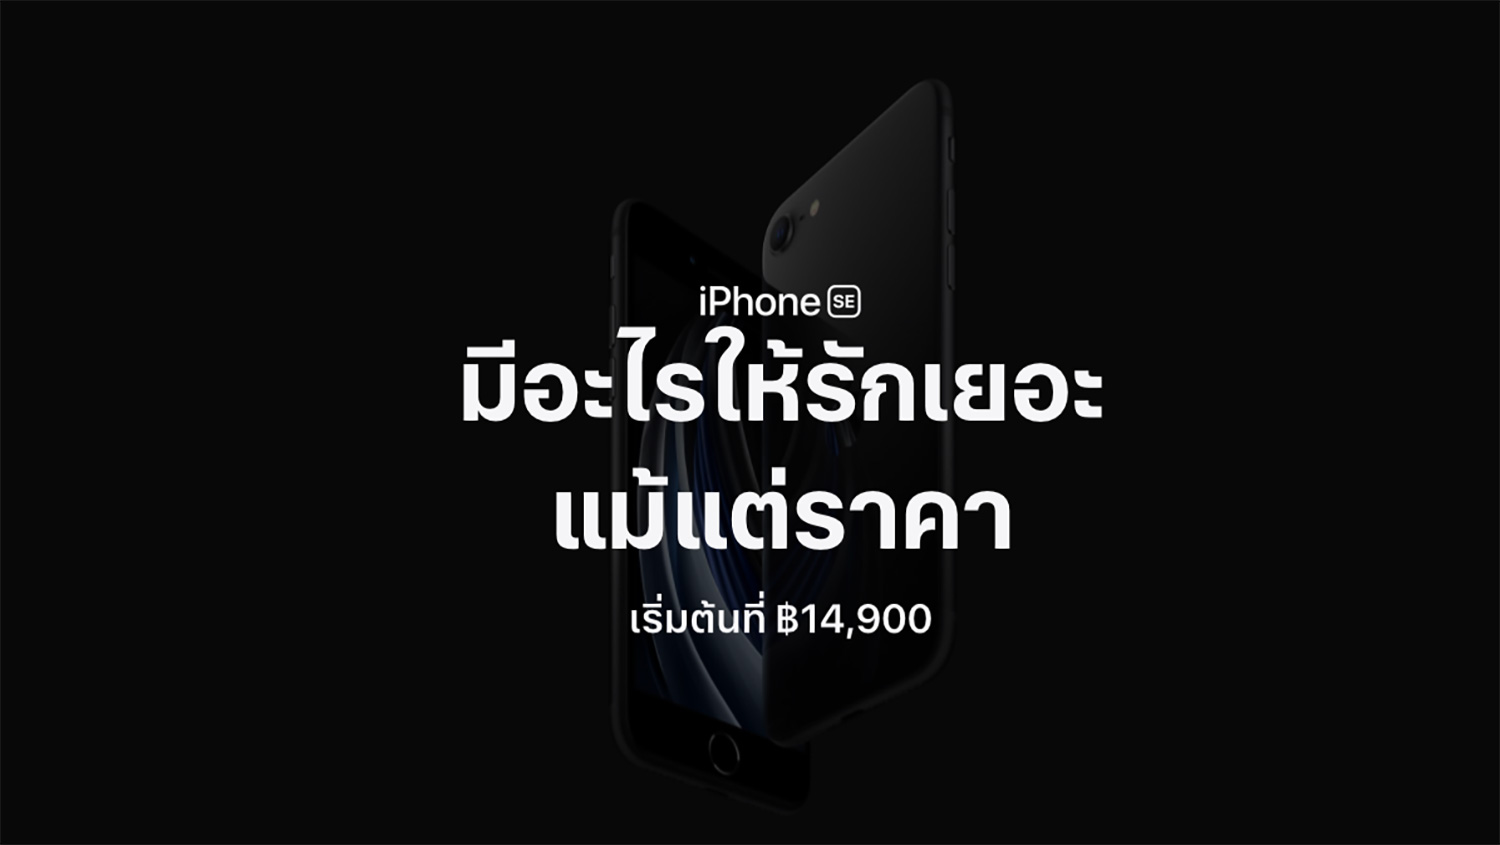 iPhone SE รุ่นที่ 2 ปี 2020 ราคา 14,900 บาท ขายในไทย 14 พฤษภาคมนี้